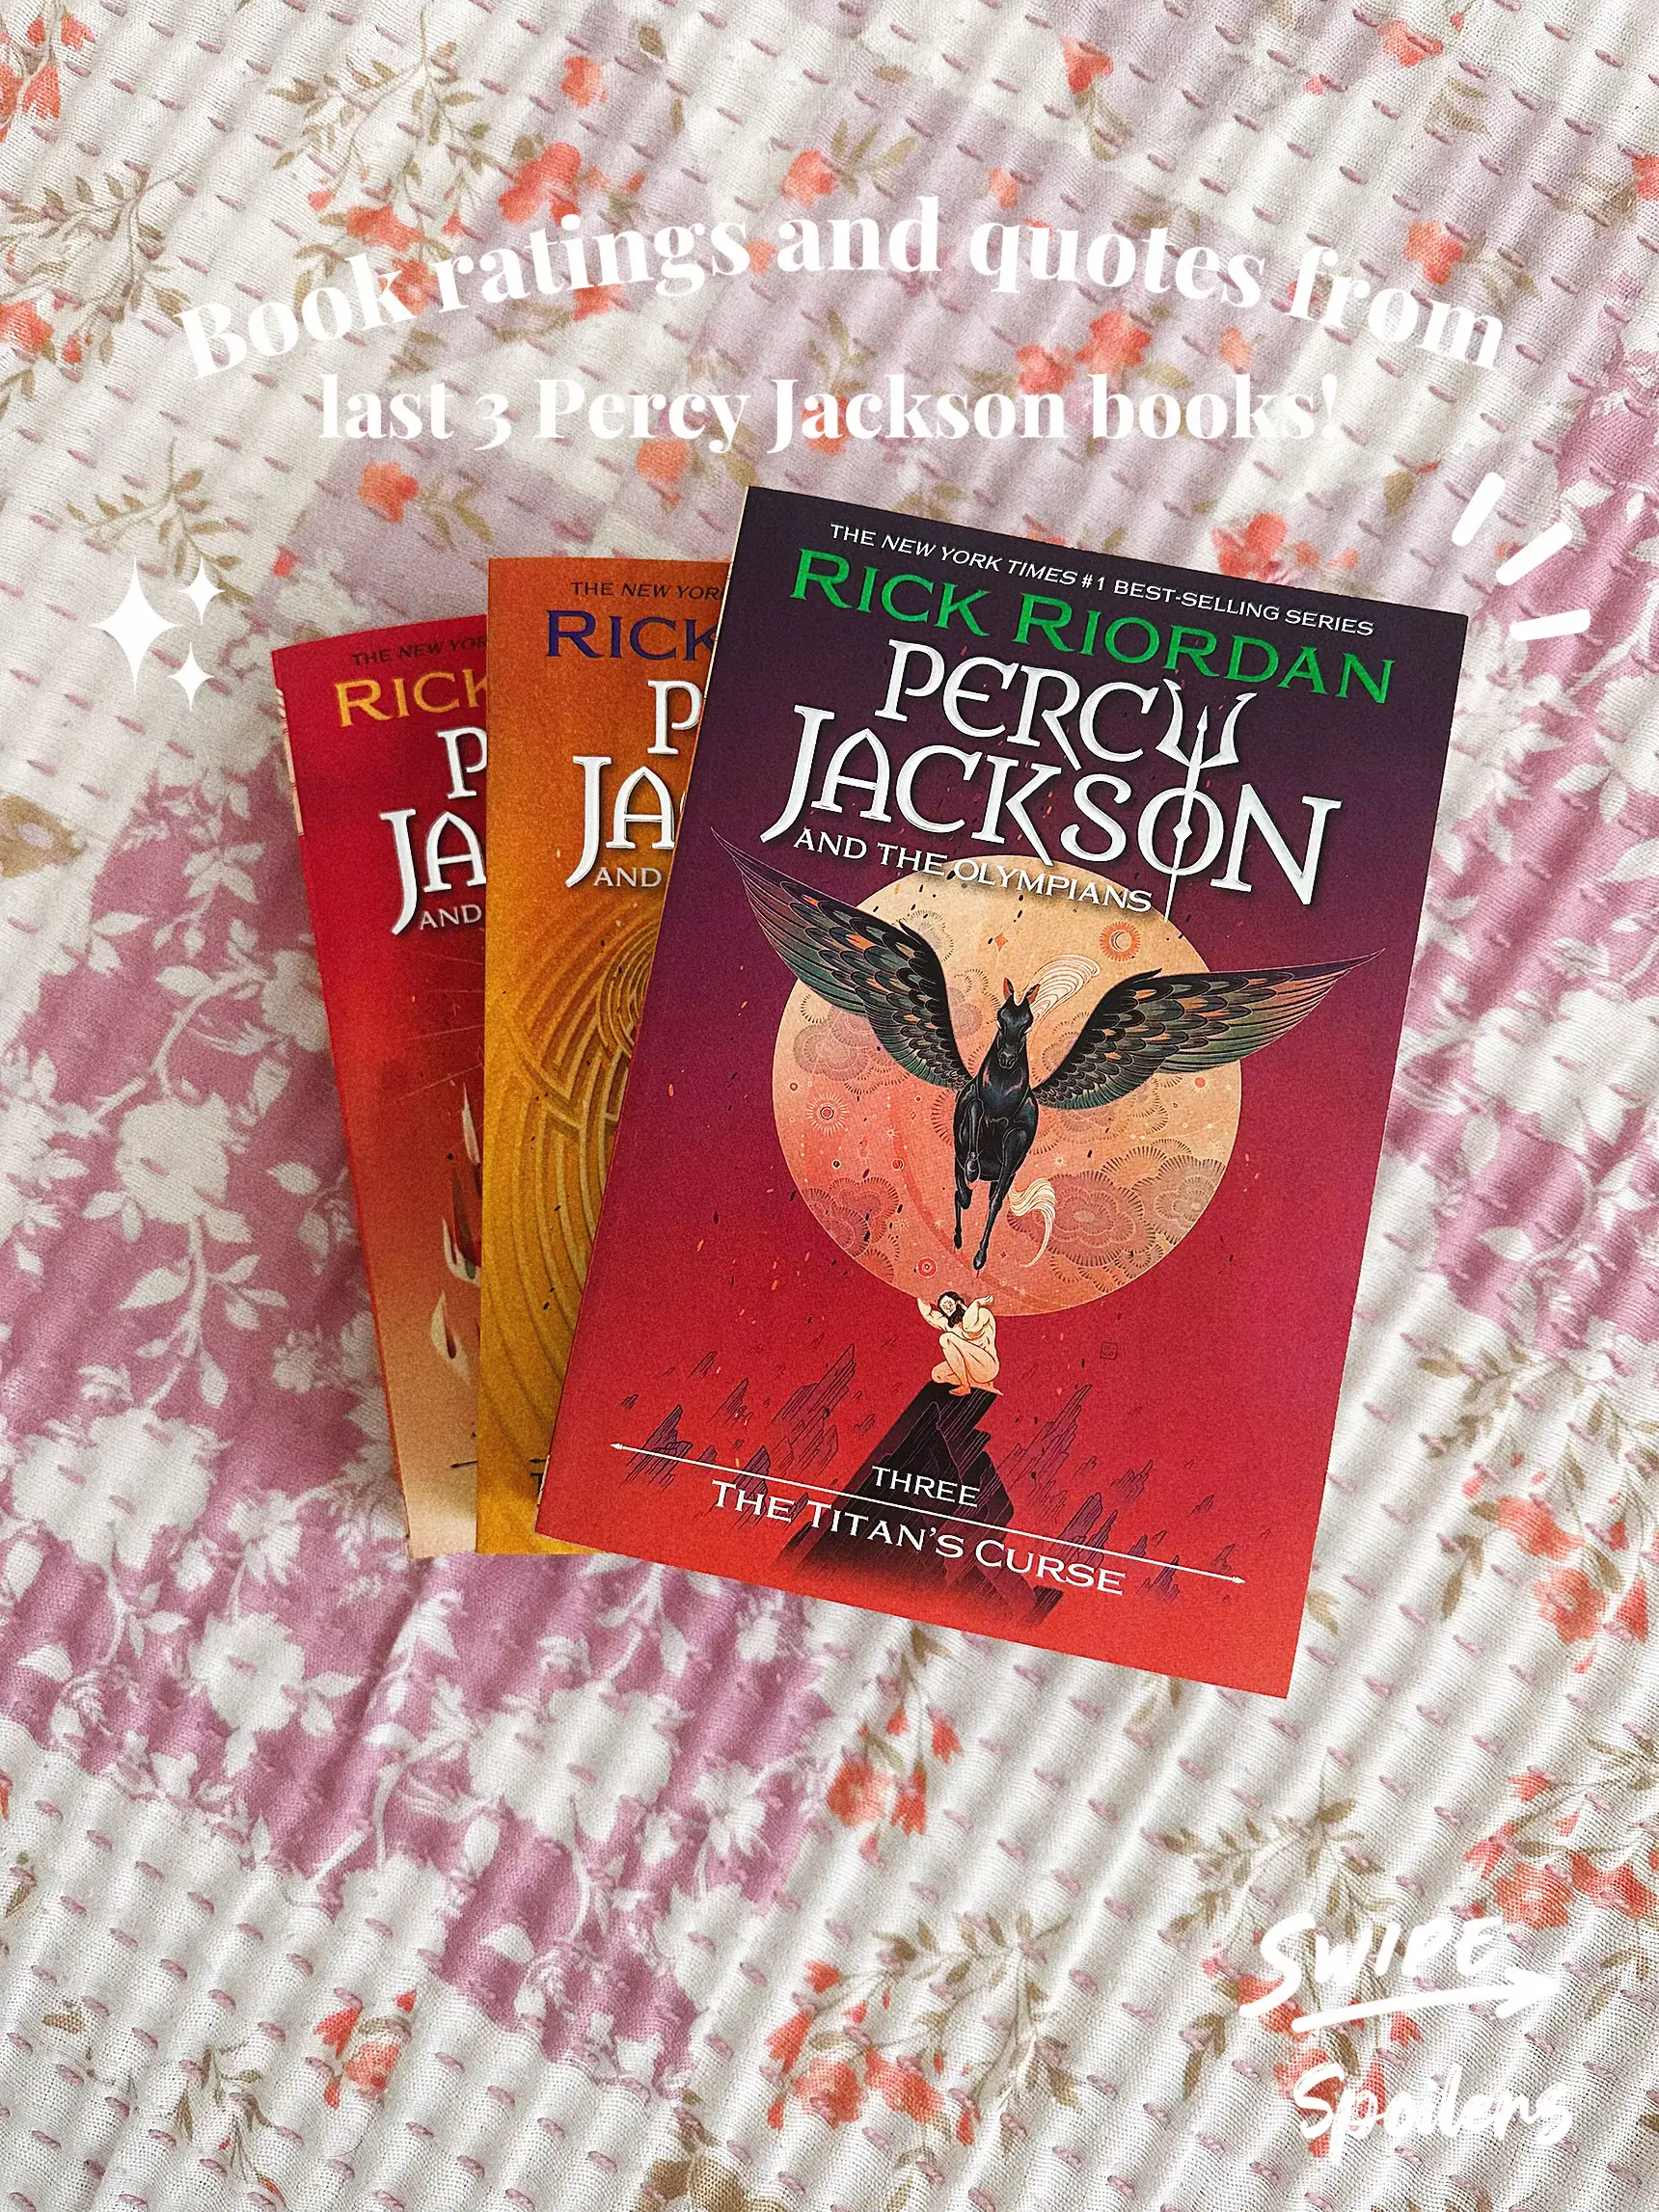 Percy Jackson and the Olympians: Books I-III eBook por Rick Riordan - EPUB  Libro